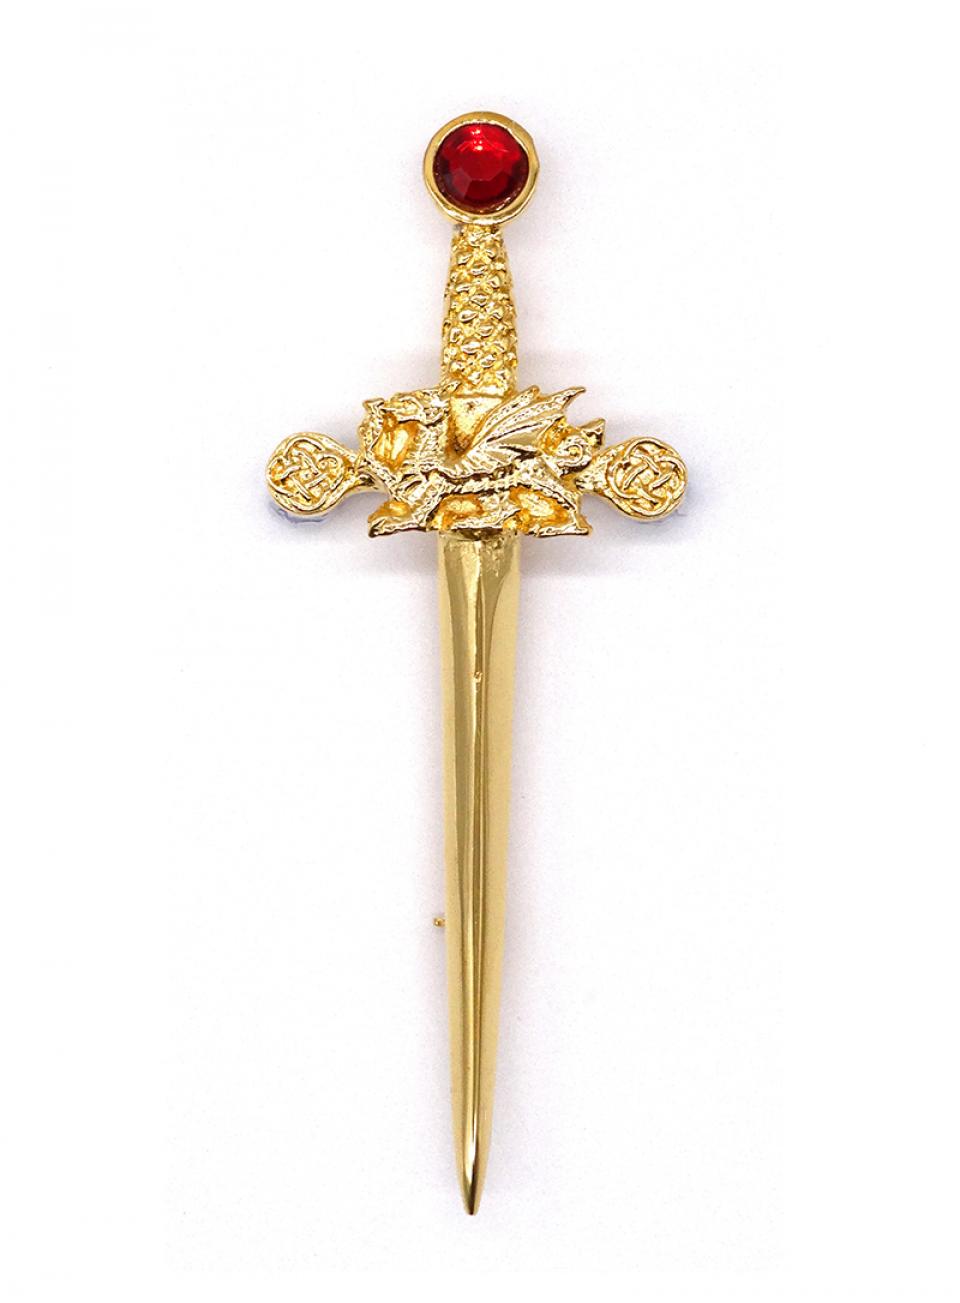 Gold Dragon Sword Kilt Pin